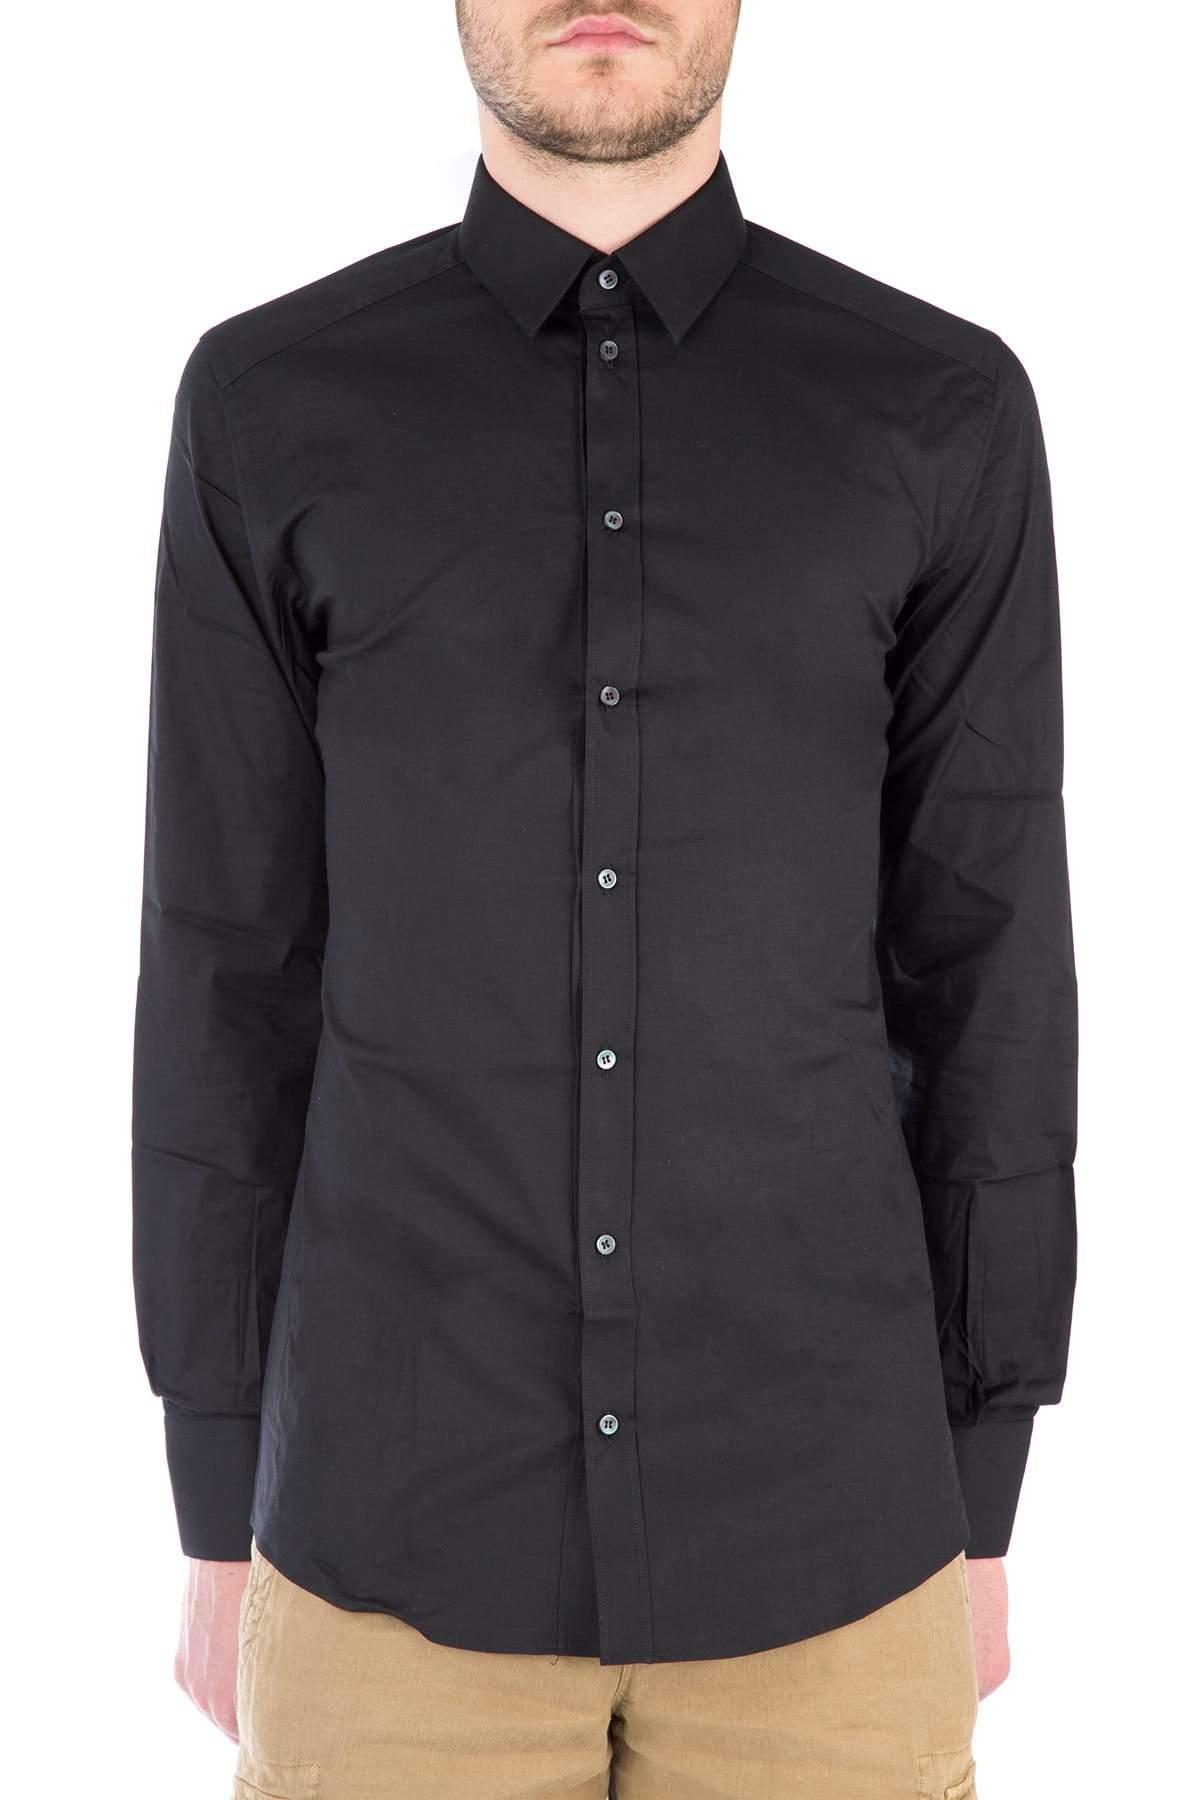 Dolce & Gabbana Cotton Classic Shirt in Black for Men - Lyst